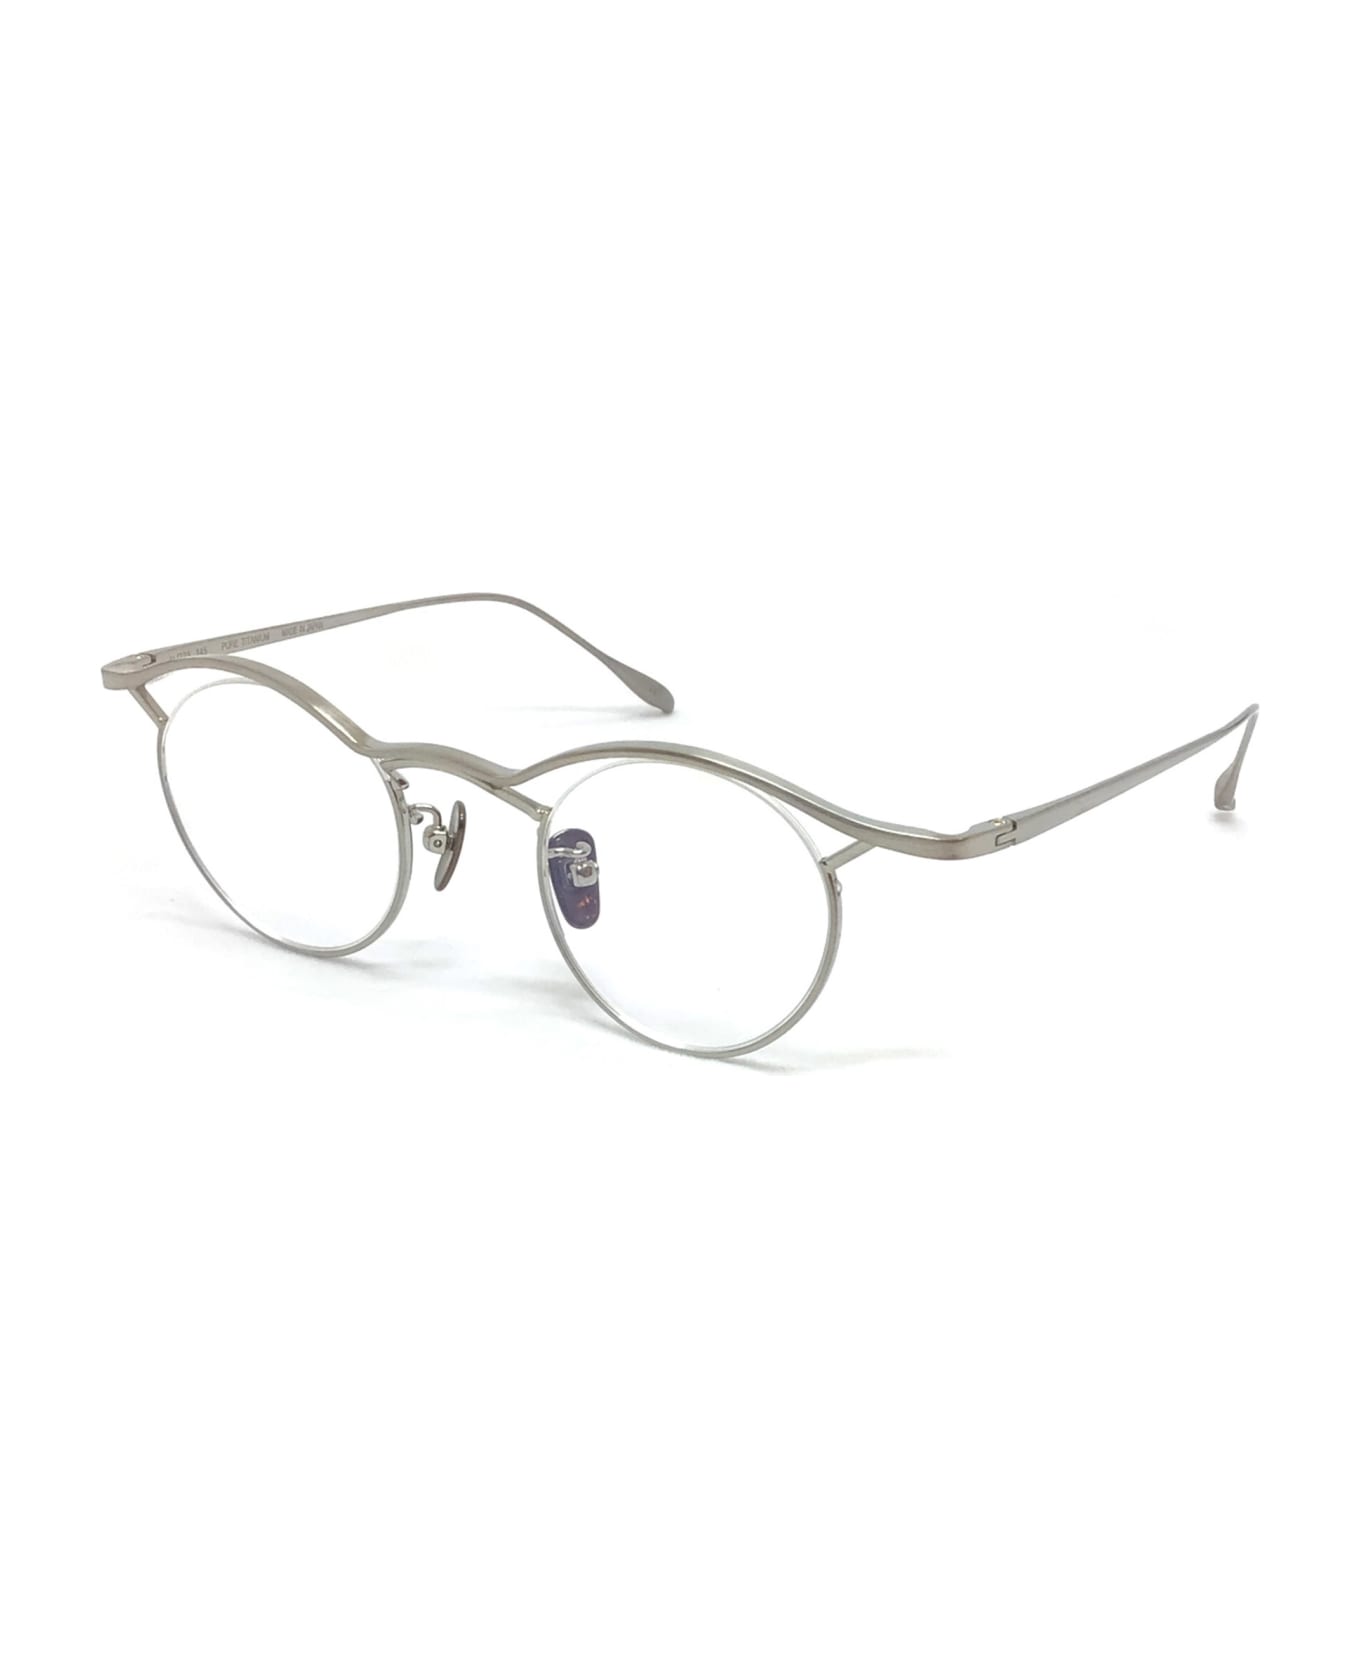 FACTORY900 Titanos X Factory900 Mf-001 - Silver Rx Glasses - Silver